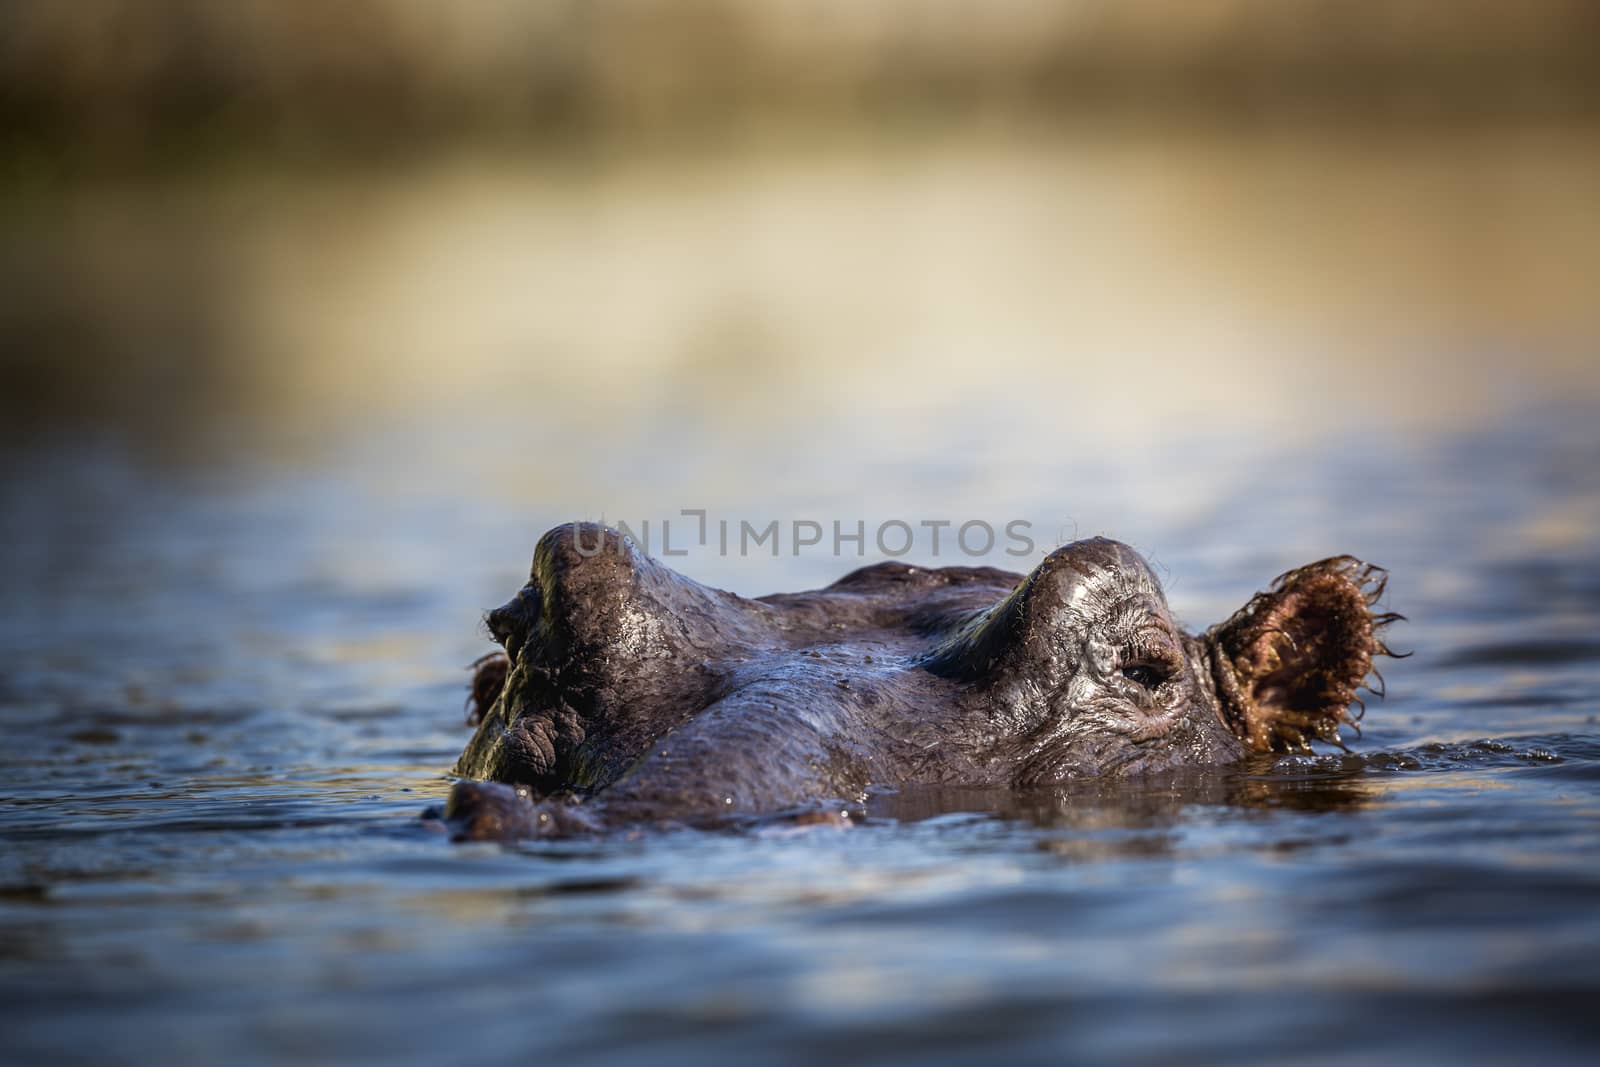 Hippopotamus head in water surface level in Kruger National park, South Africa ; Specie Hippopotamus amphibius family of Hippopotamidae